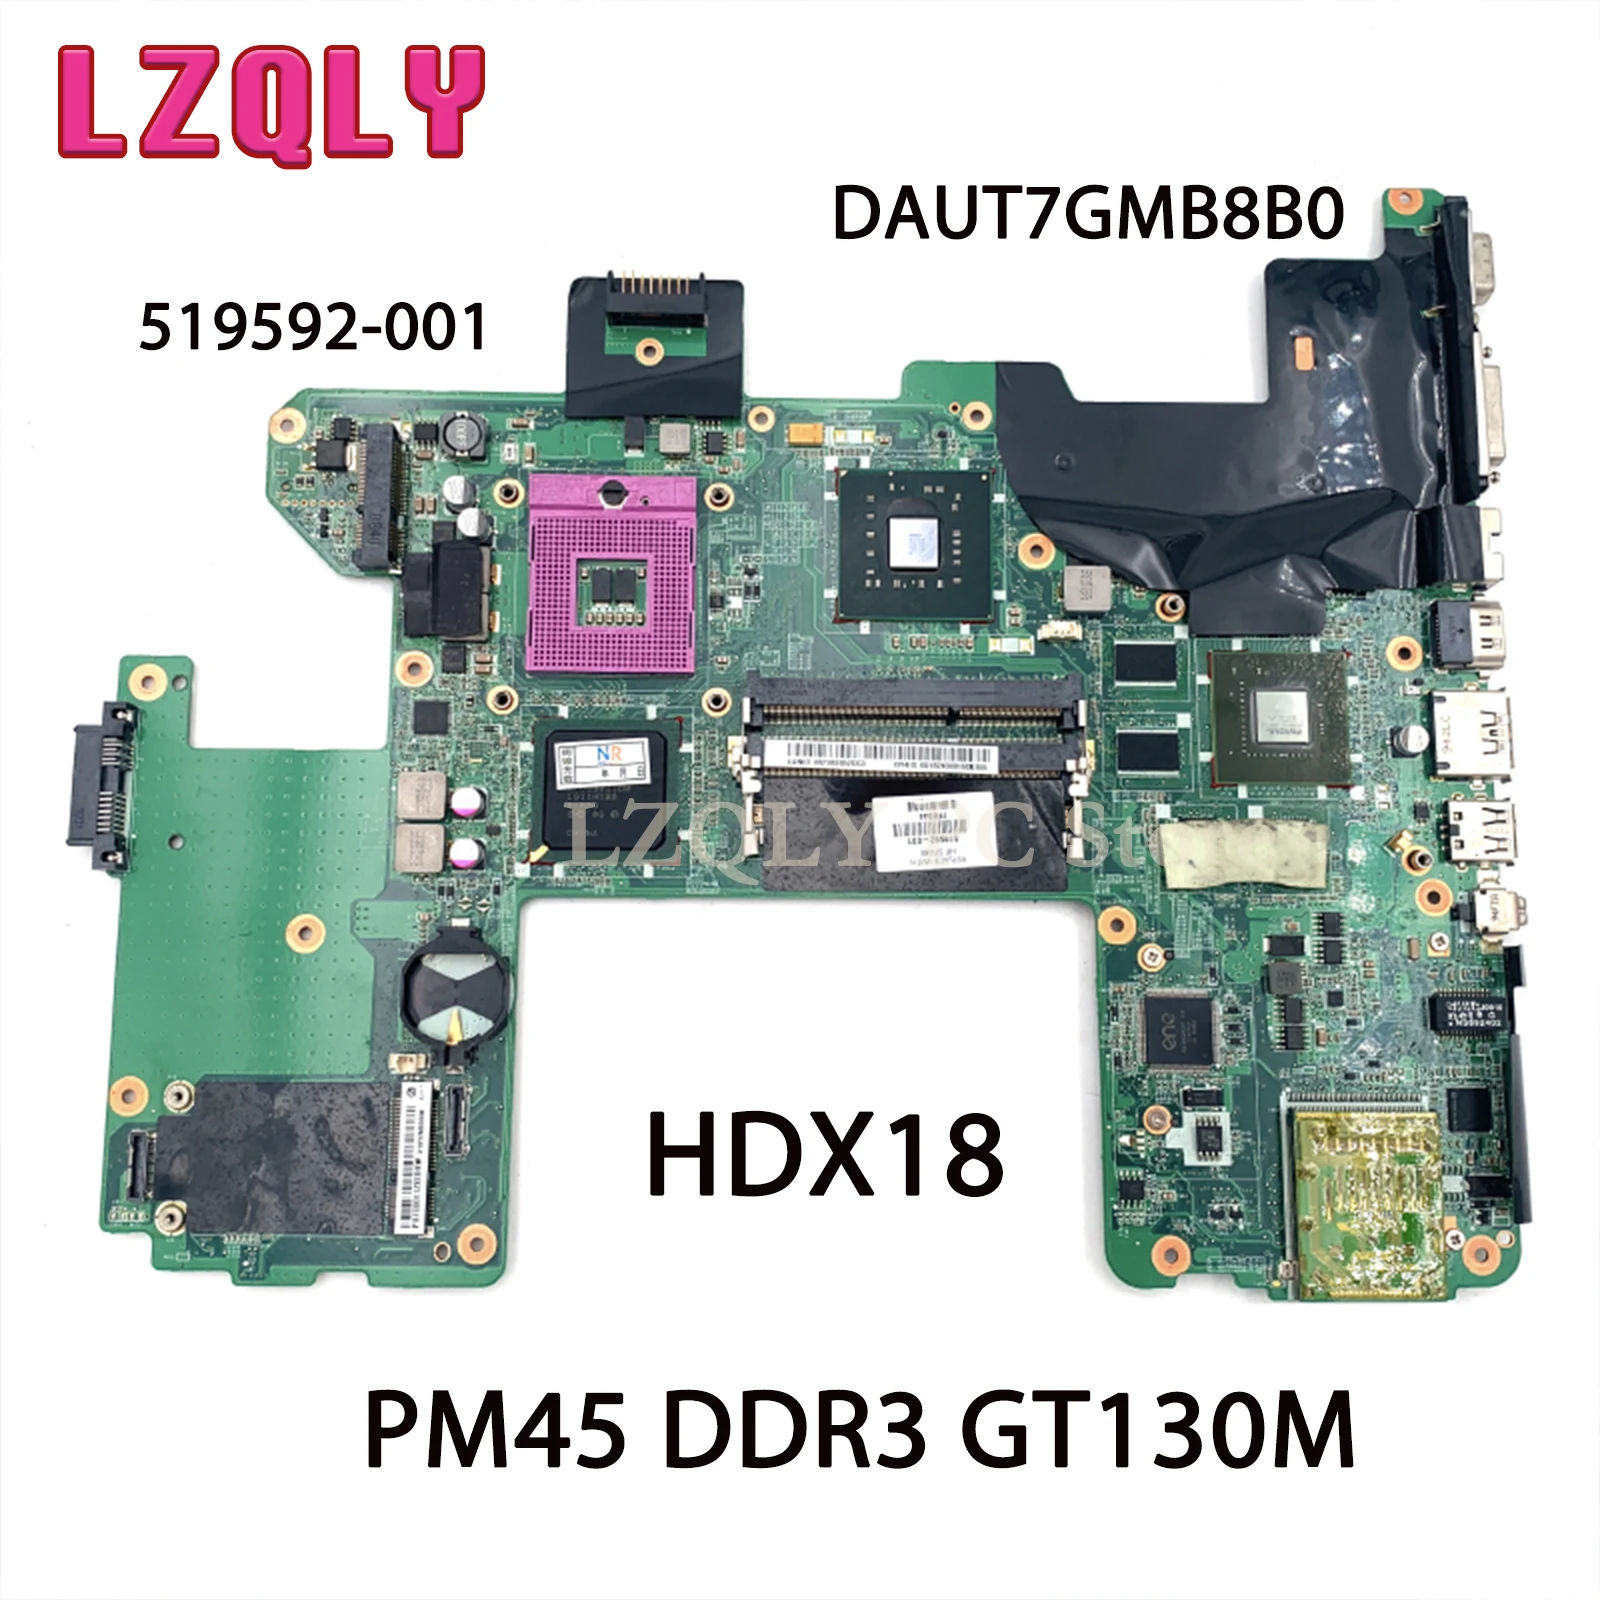 

Материнская плата LZQLY для ноутбука HP Pavilion HDX18 DAUT7GMB8B0 519592-001, материнская плата для ноутбука 18 дюймов PM45 DDR3 GT130M GPU, без центрального процессора